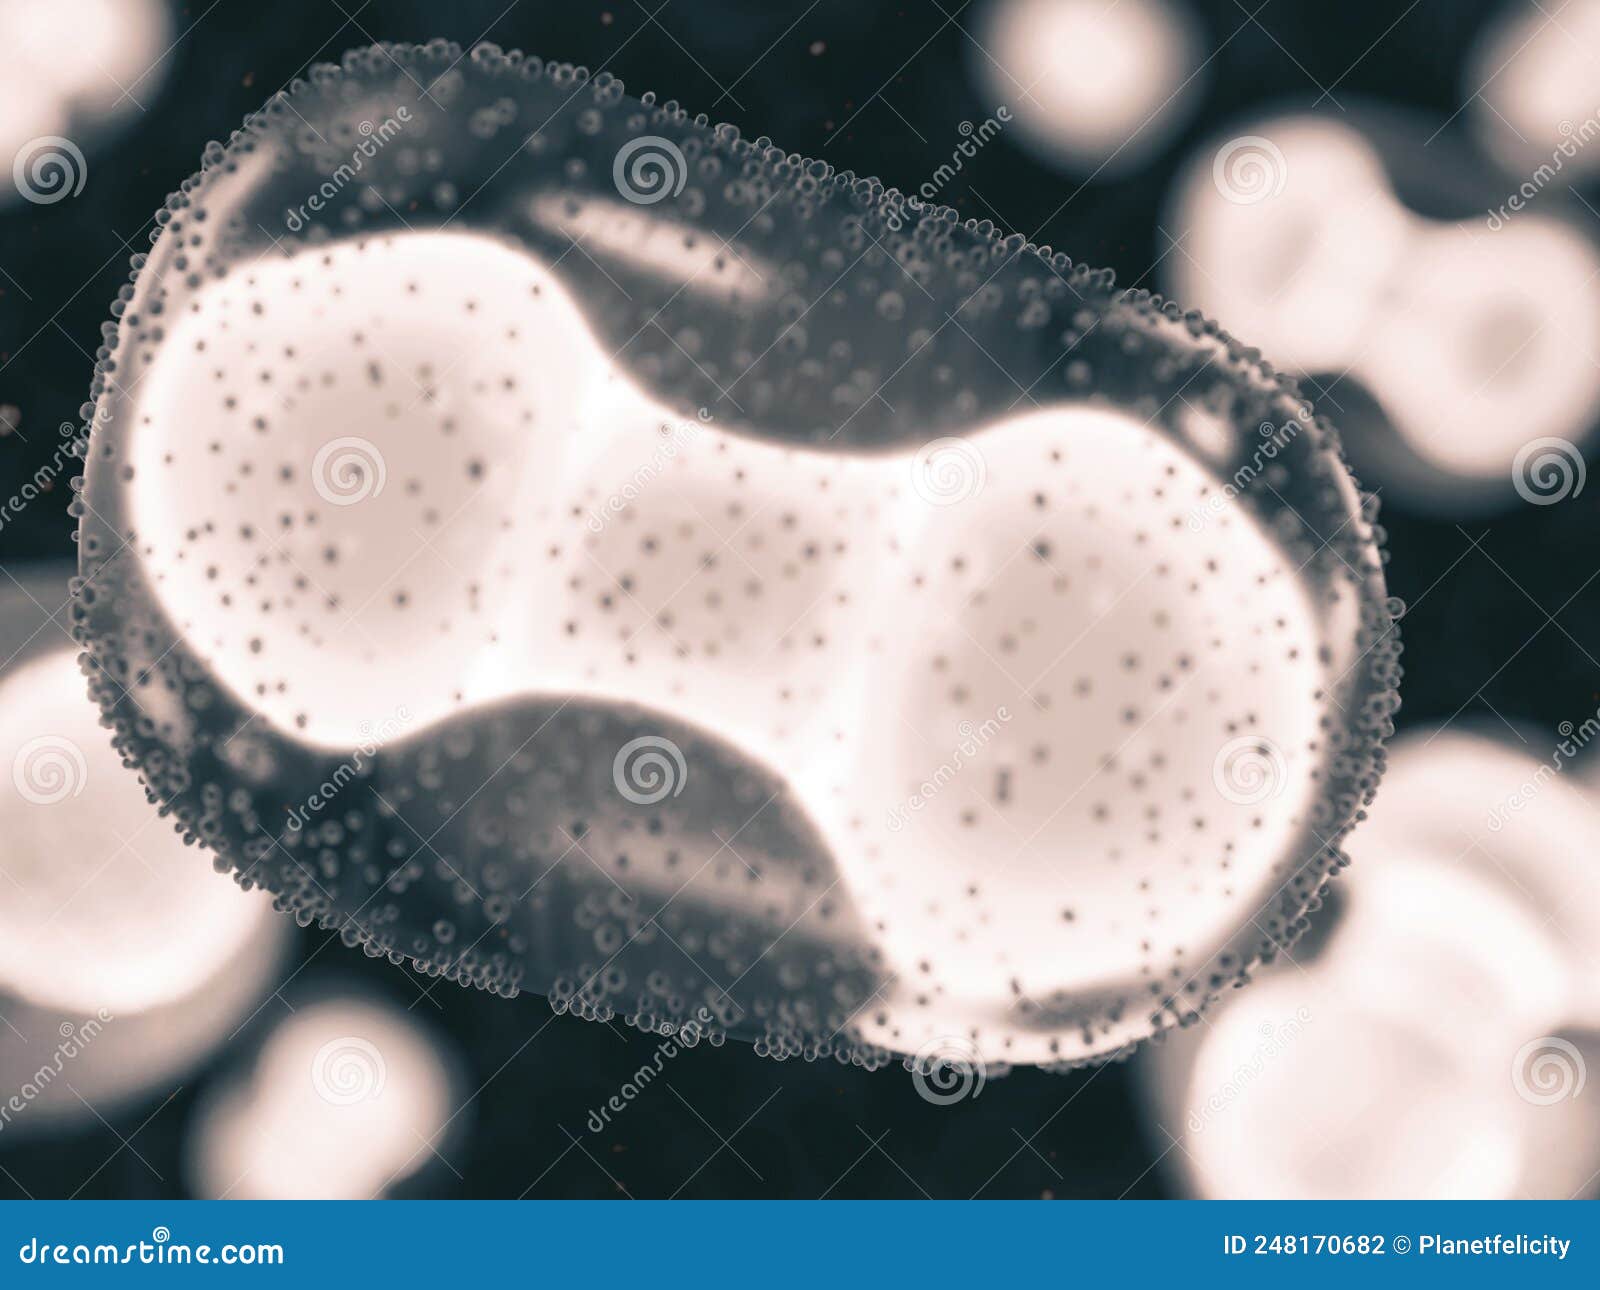 virus close-up: monkeypox